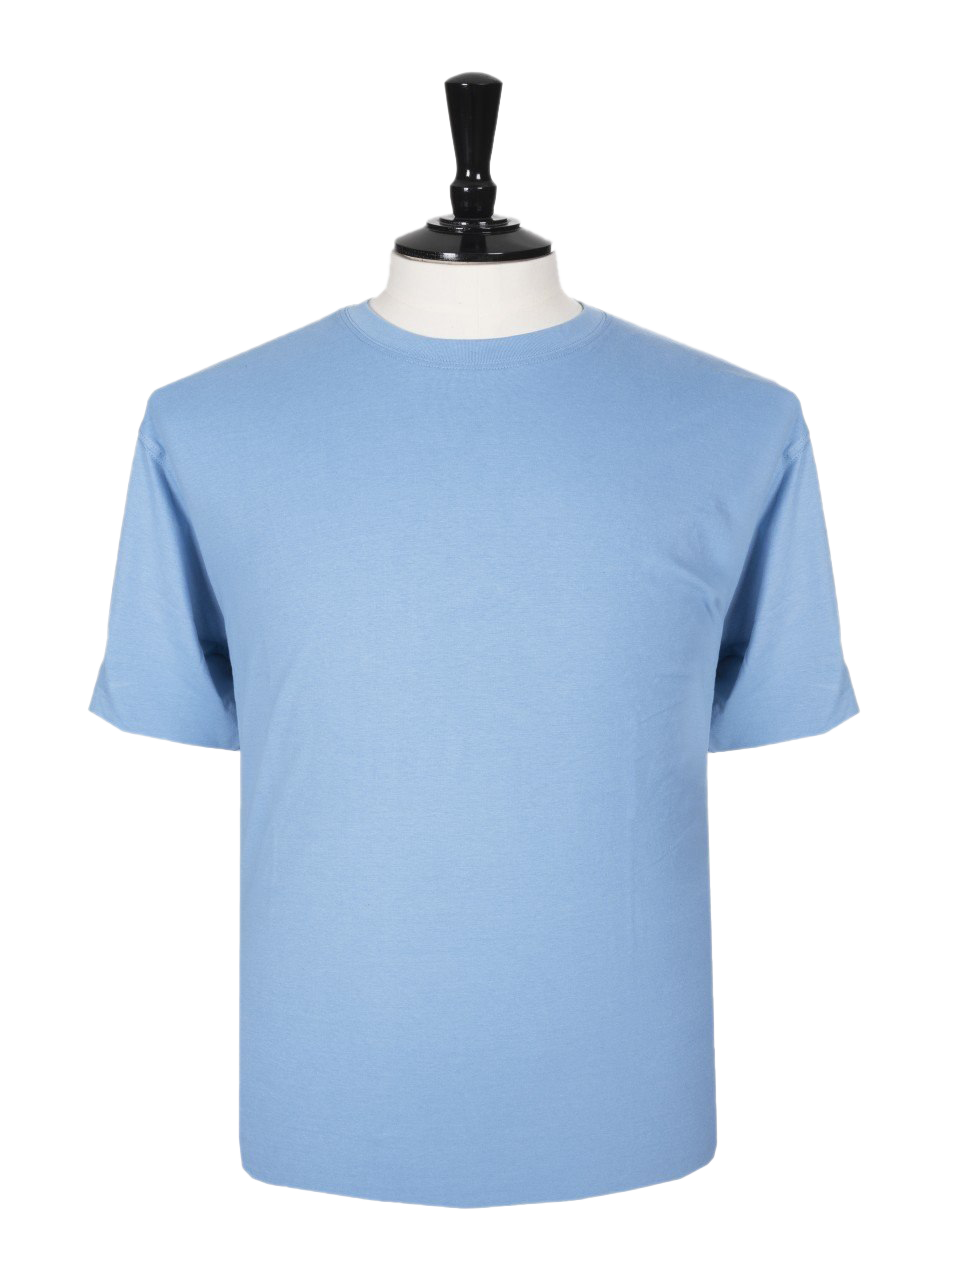 Blue Tshirt Png Transparent Blue Tshirtpng Images Pluspng Images